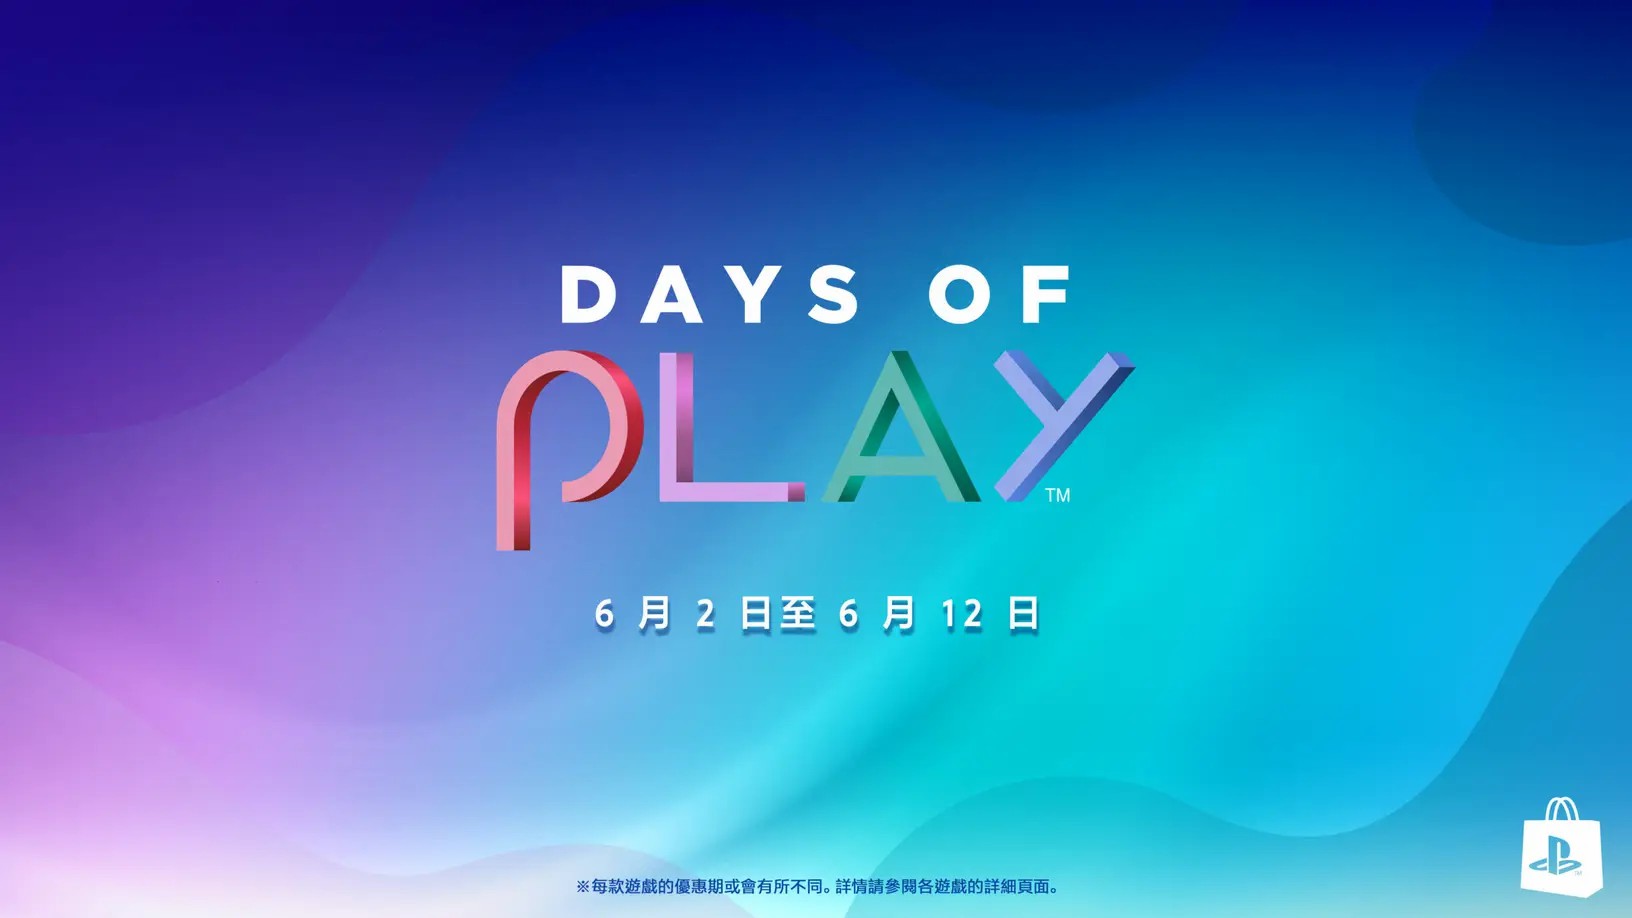 PS年中大促“DAYS OF PLAY”正式开启 会员75折优惠